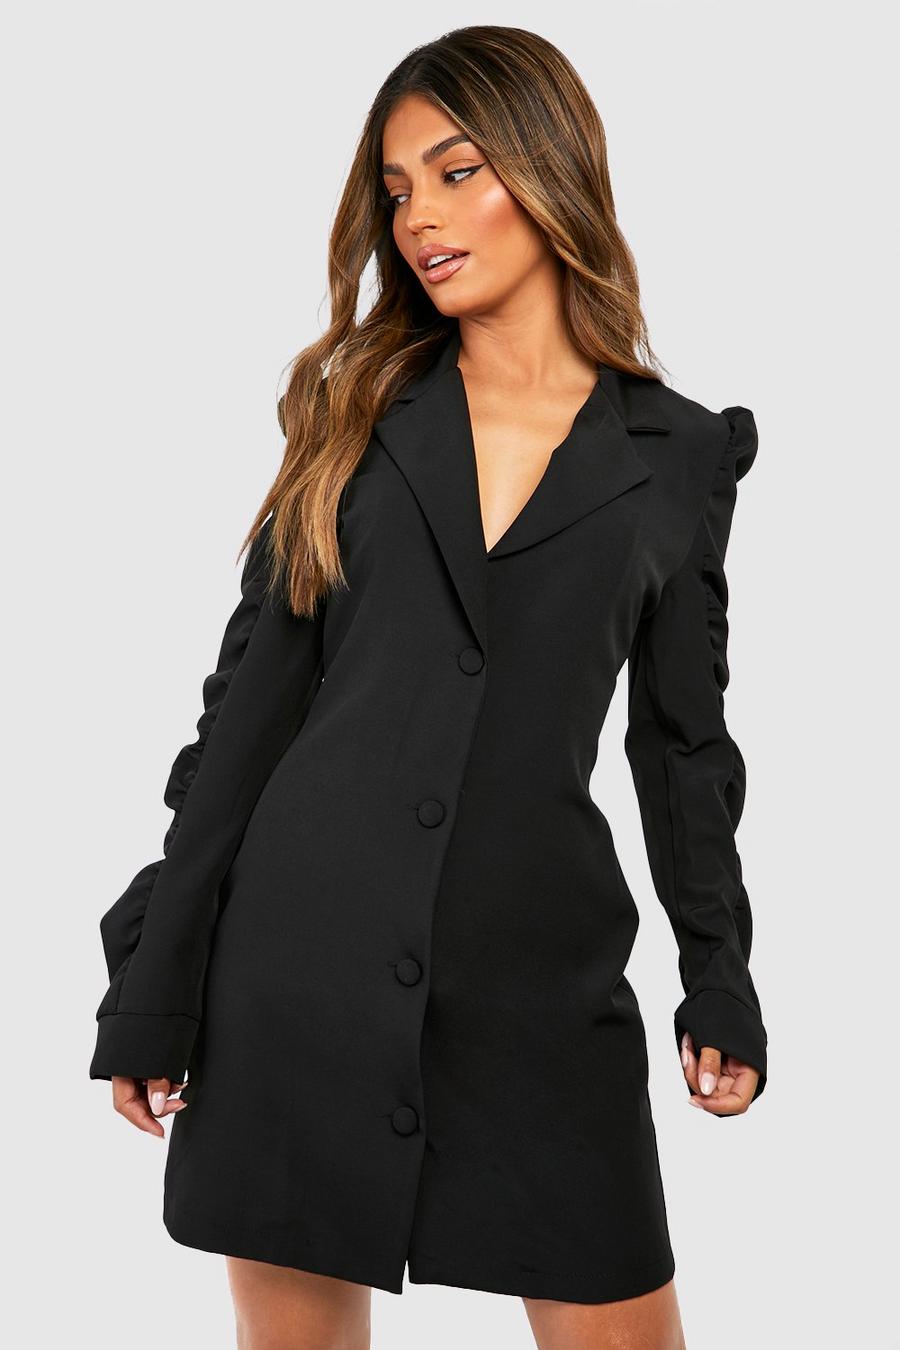 Black Ruched Sleeve Tailored Blazer Dress